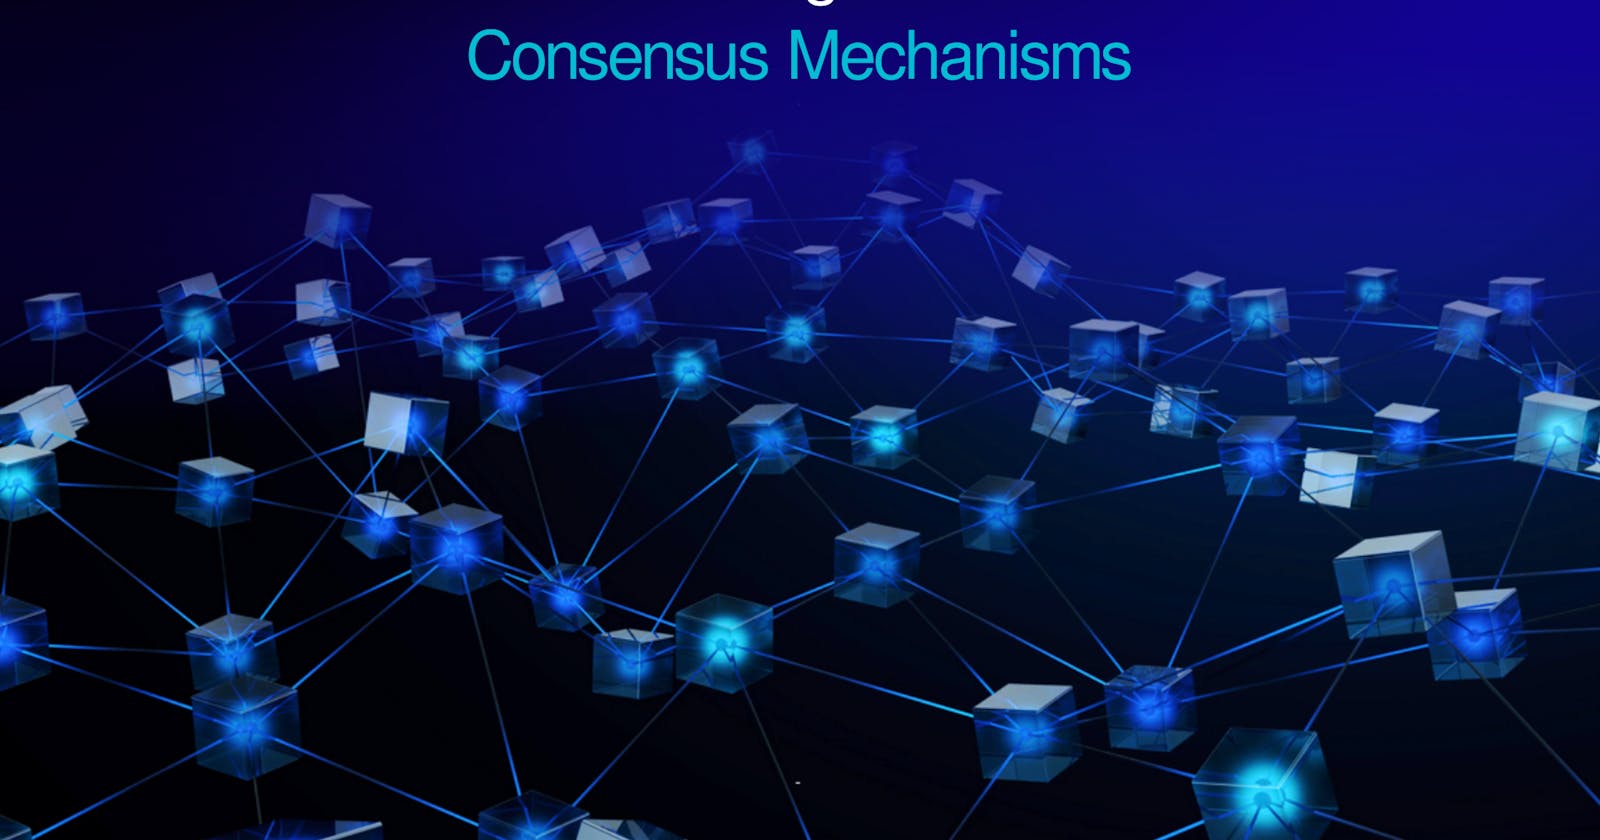 Understanding Blockchain Consensus Mechanisms